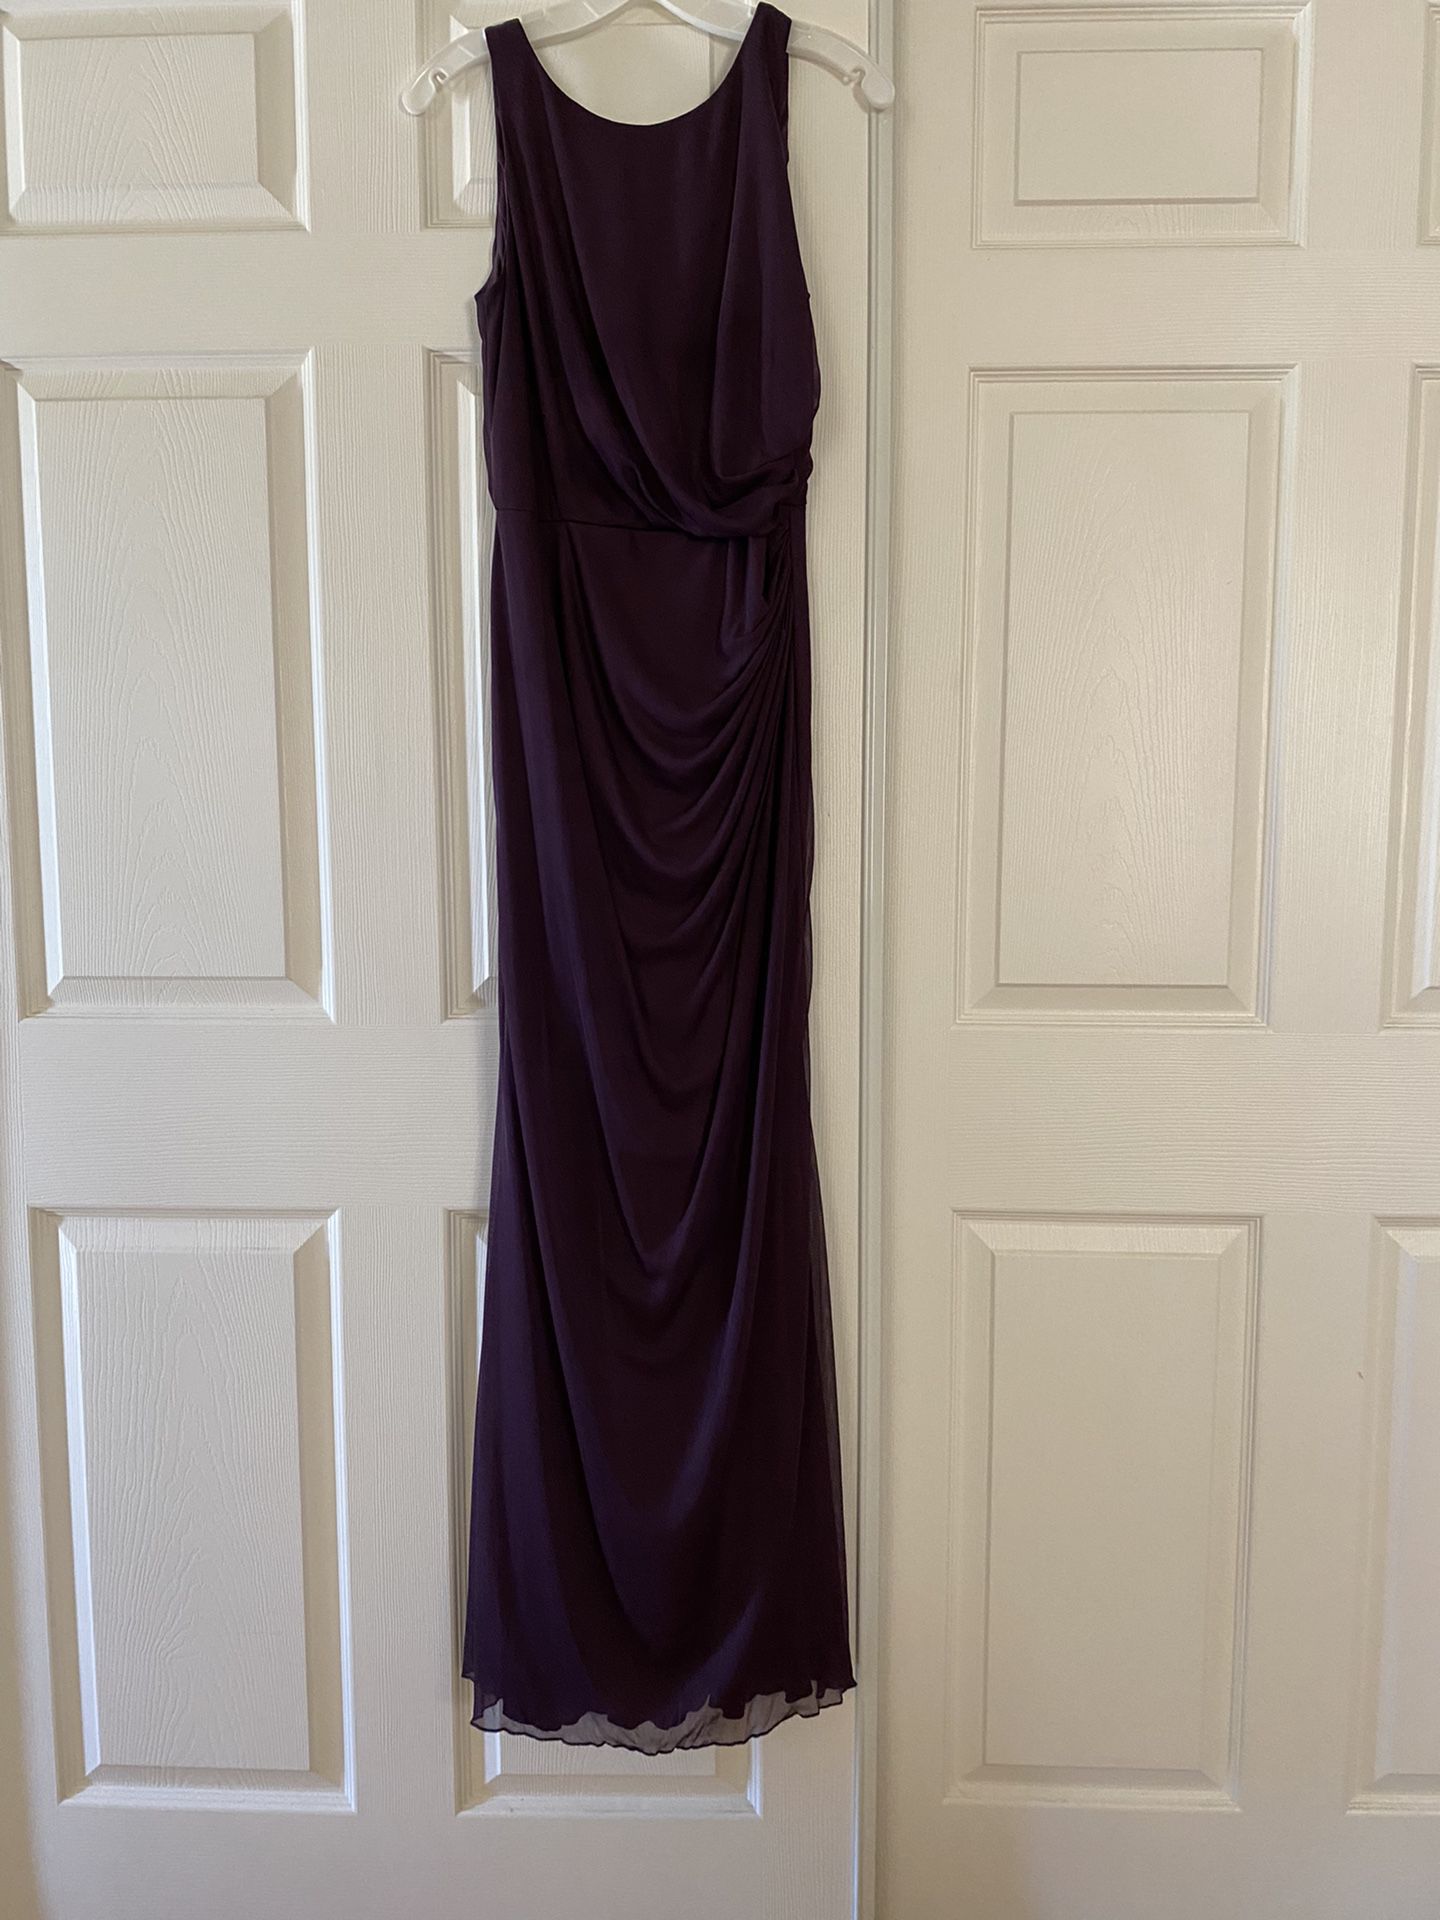 Purple Dress Slit On the Left Side .